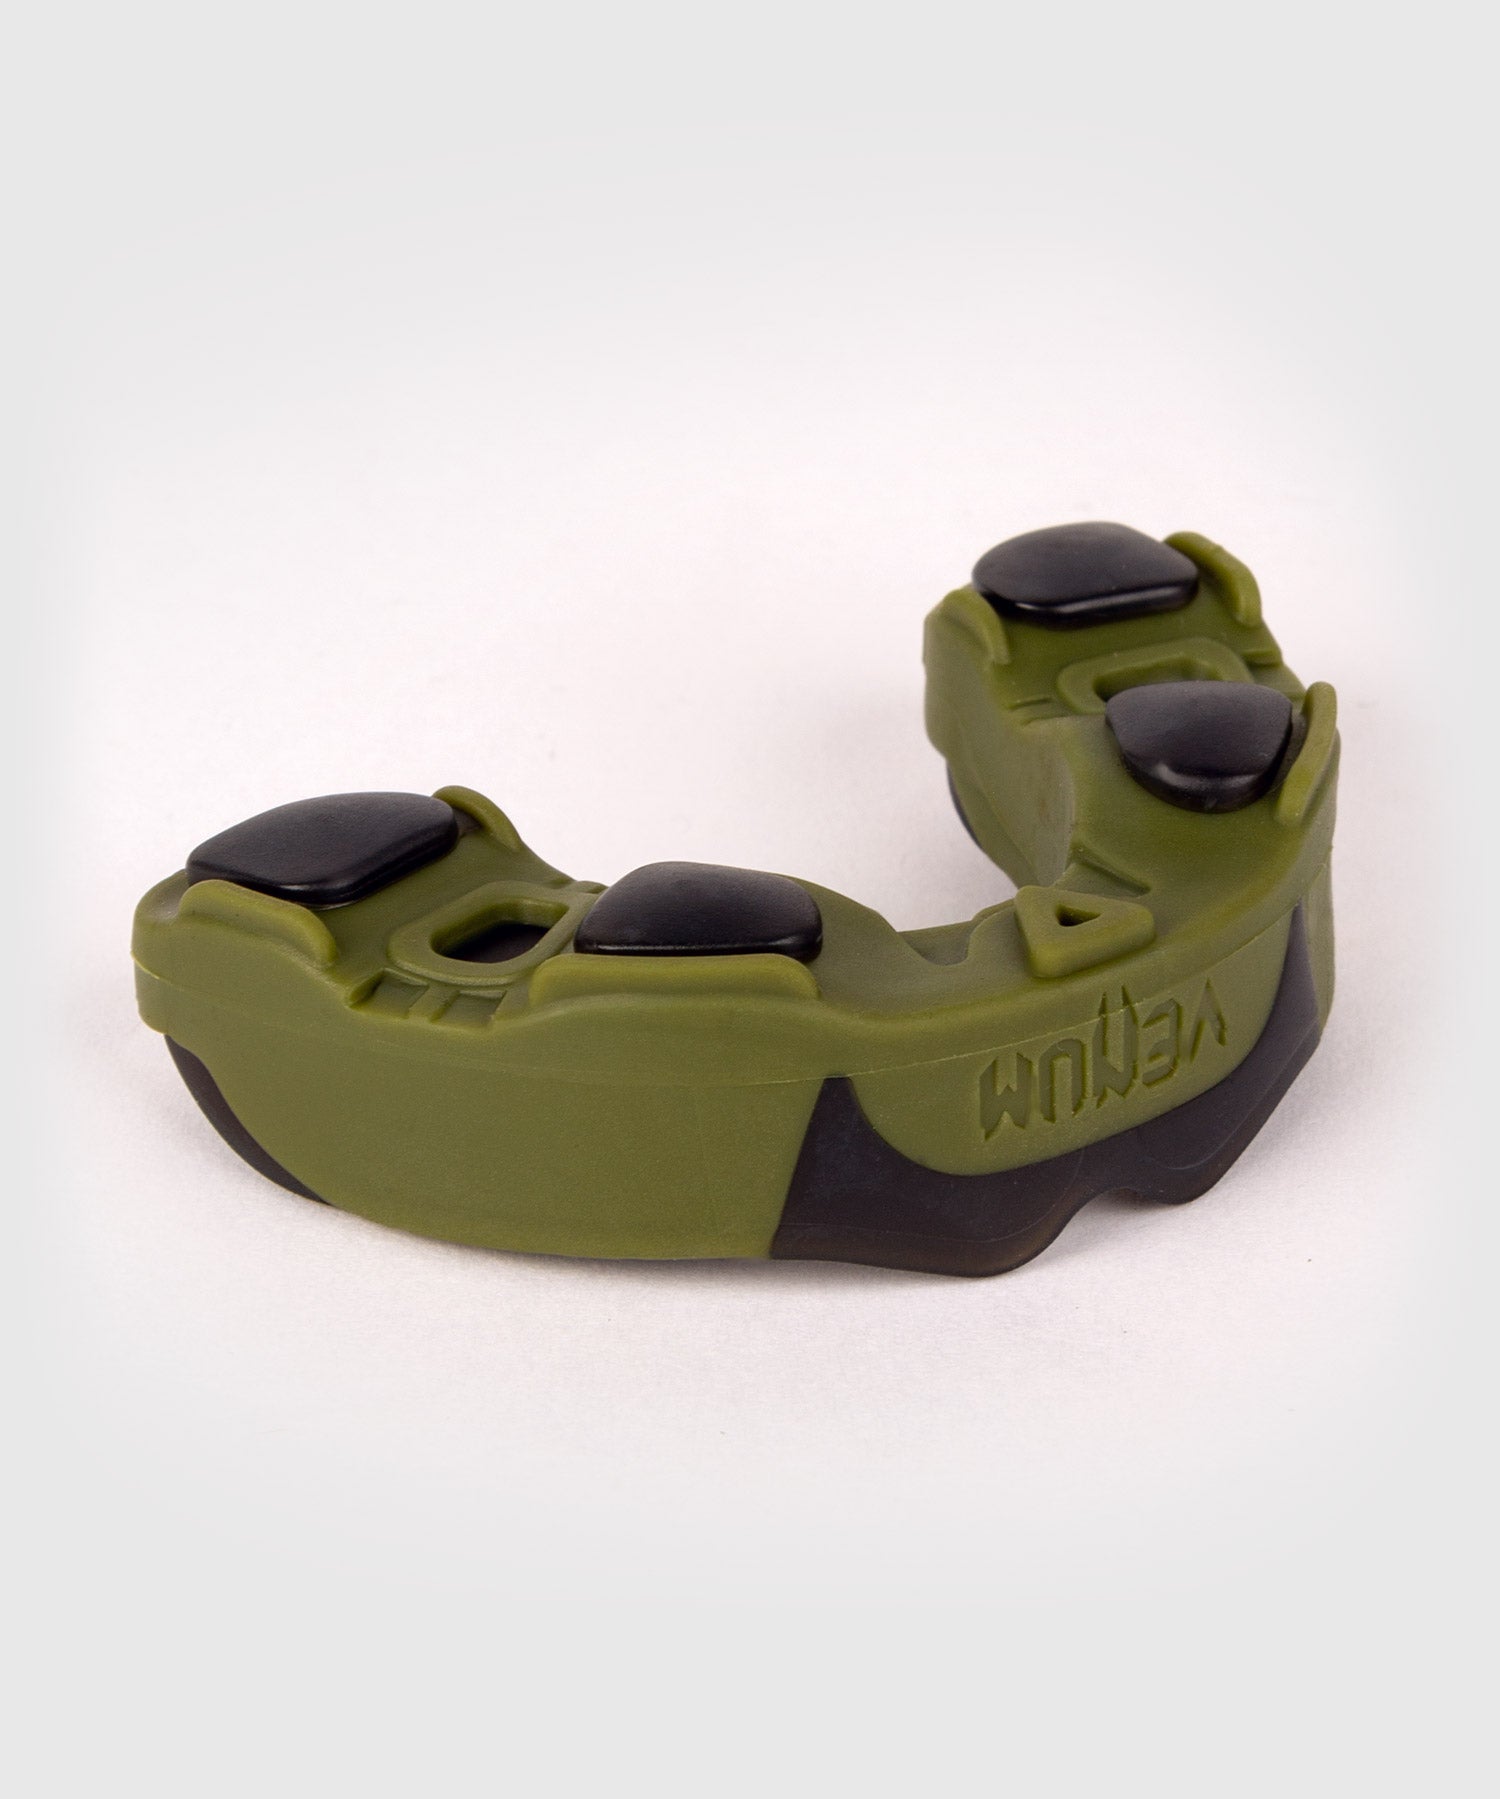 Accessoires de sports de combat Venum Protège dents Predator